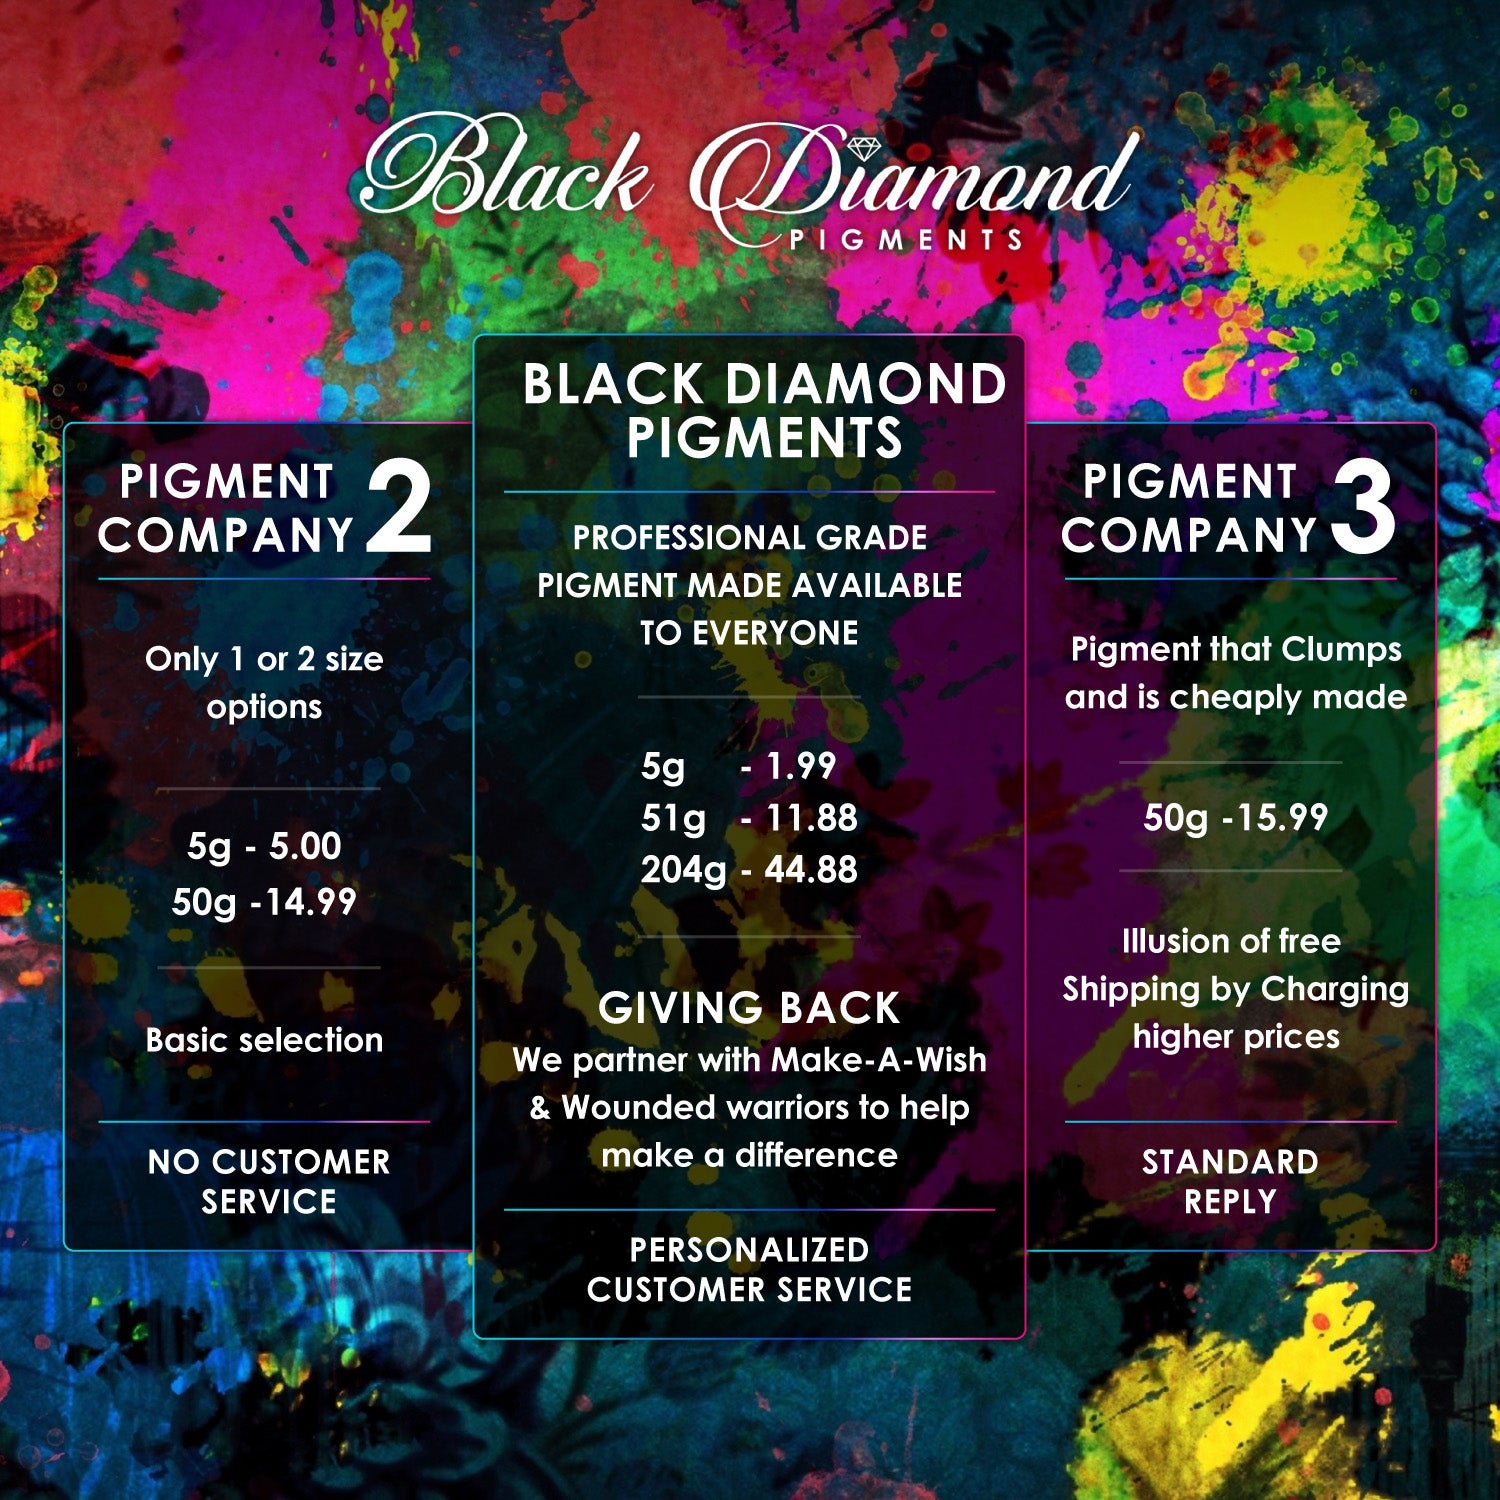 "TUSCAN SUNSET" Black Diamond Pigments